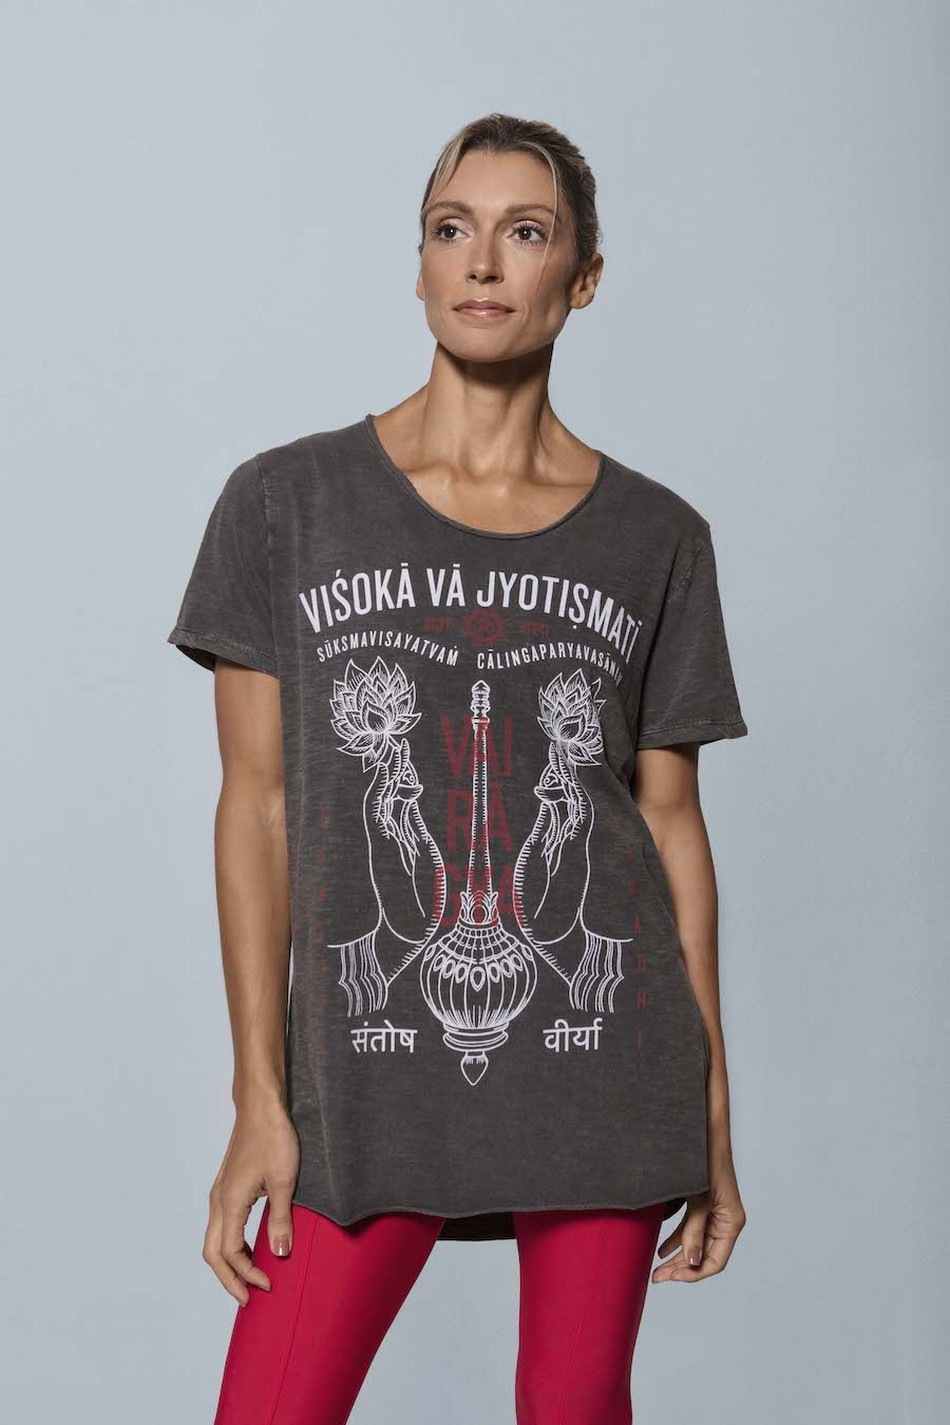 T-shirt unisex ampla com gola aberta, base levemente fraldada. ESTAMPA MÃOS